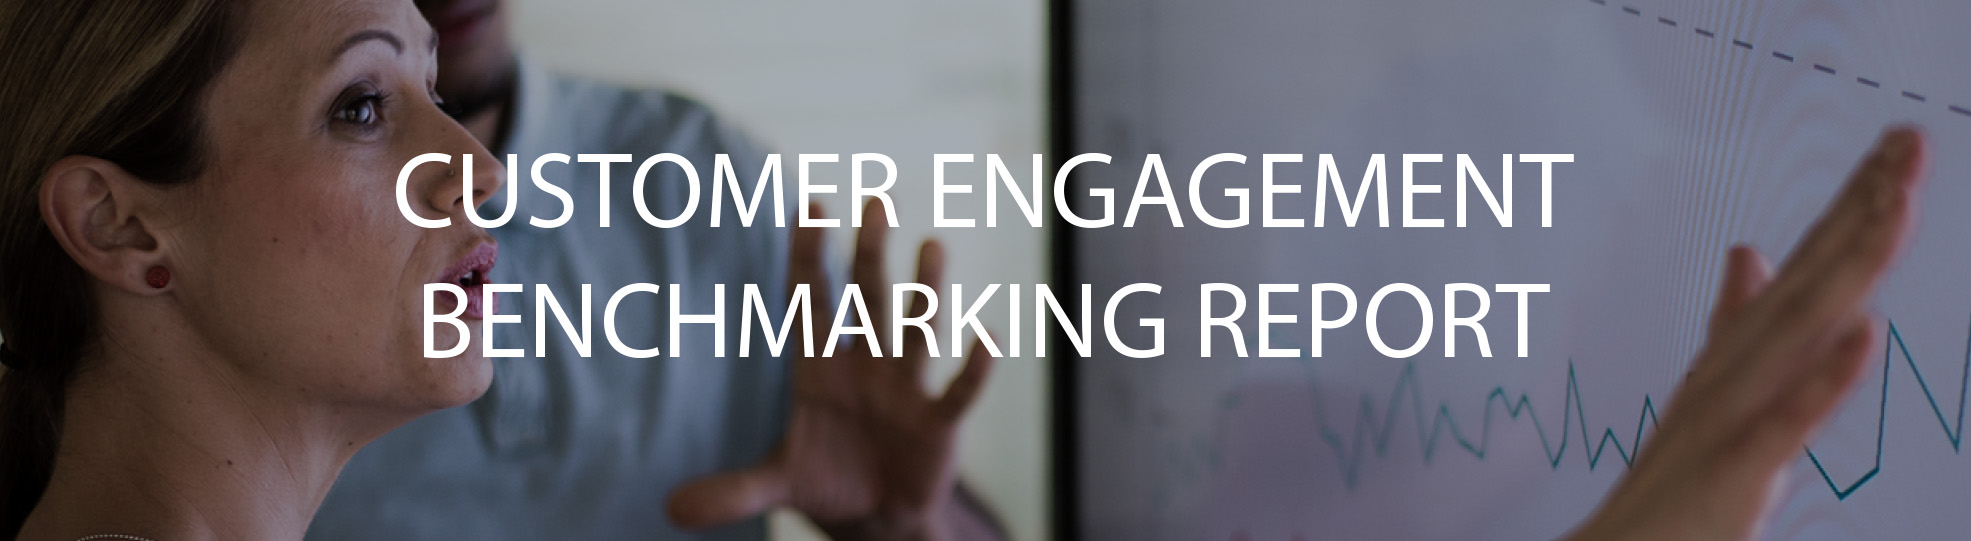 Customer Engagement Benchmarking Report